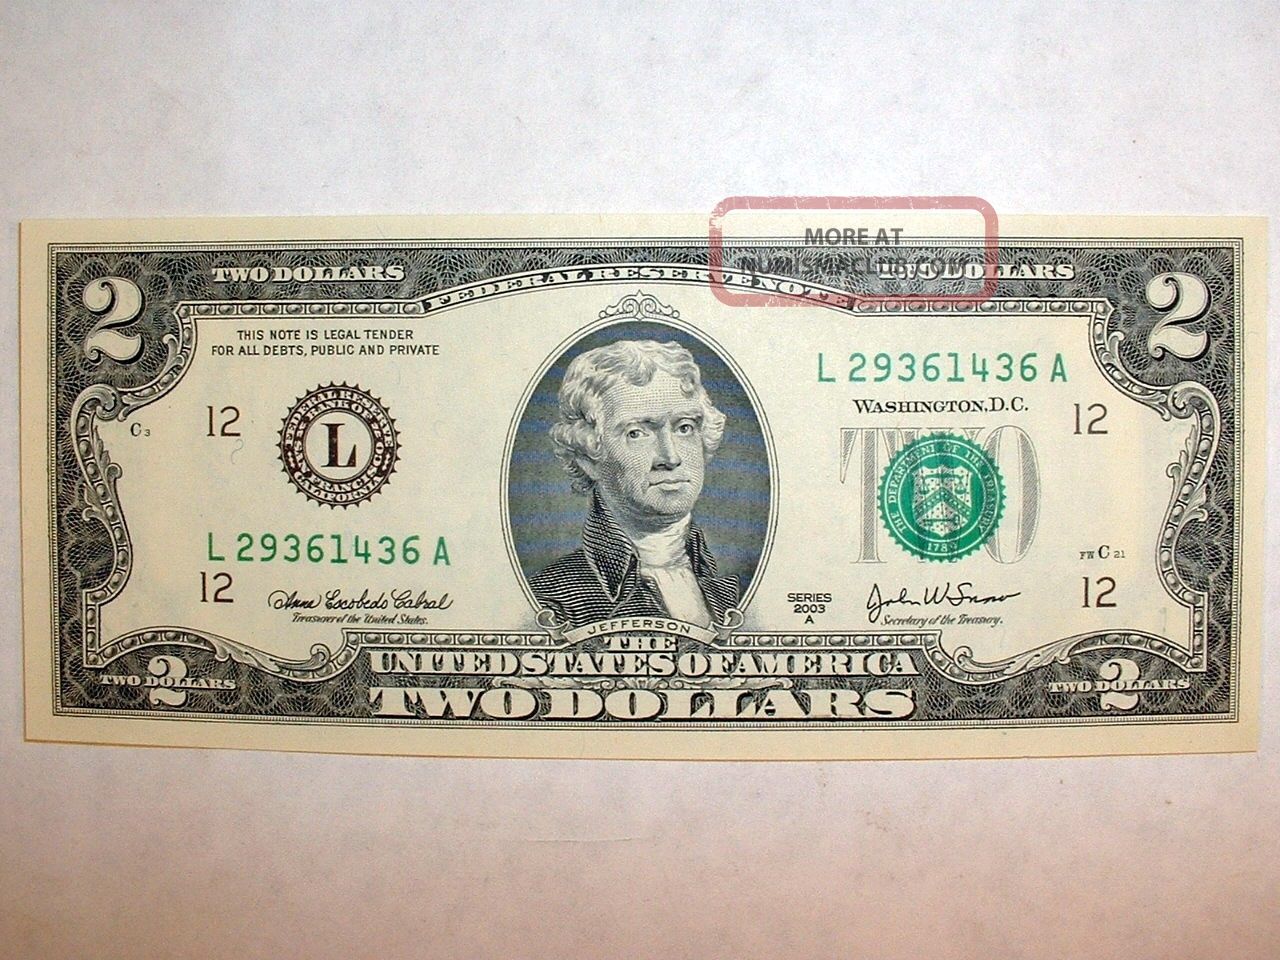 20 dollar bill serial number lookup 1995 seriesp